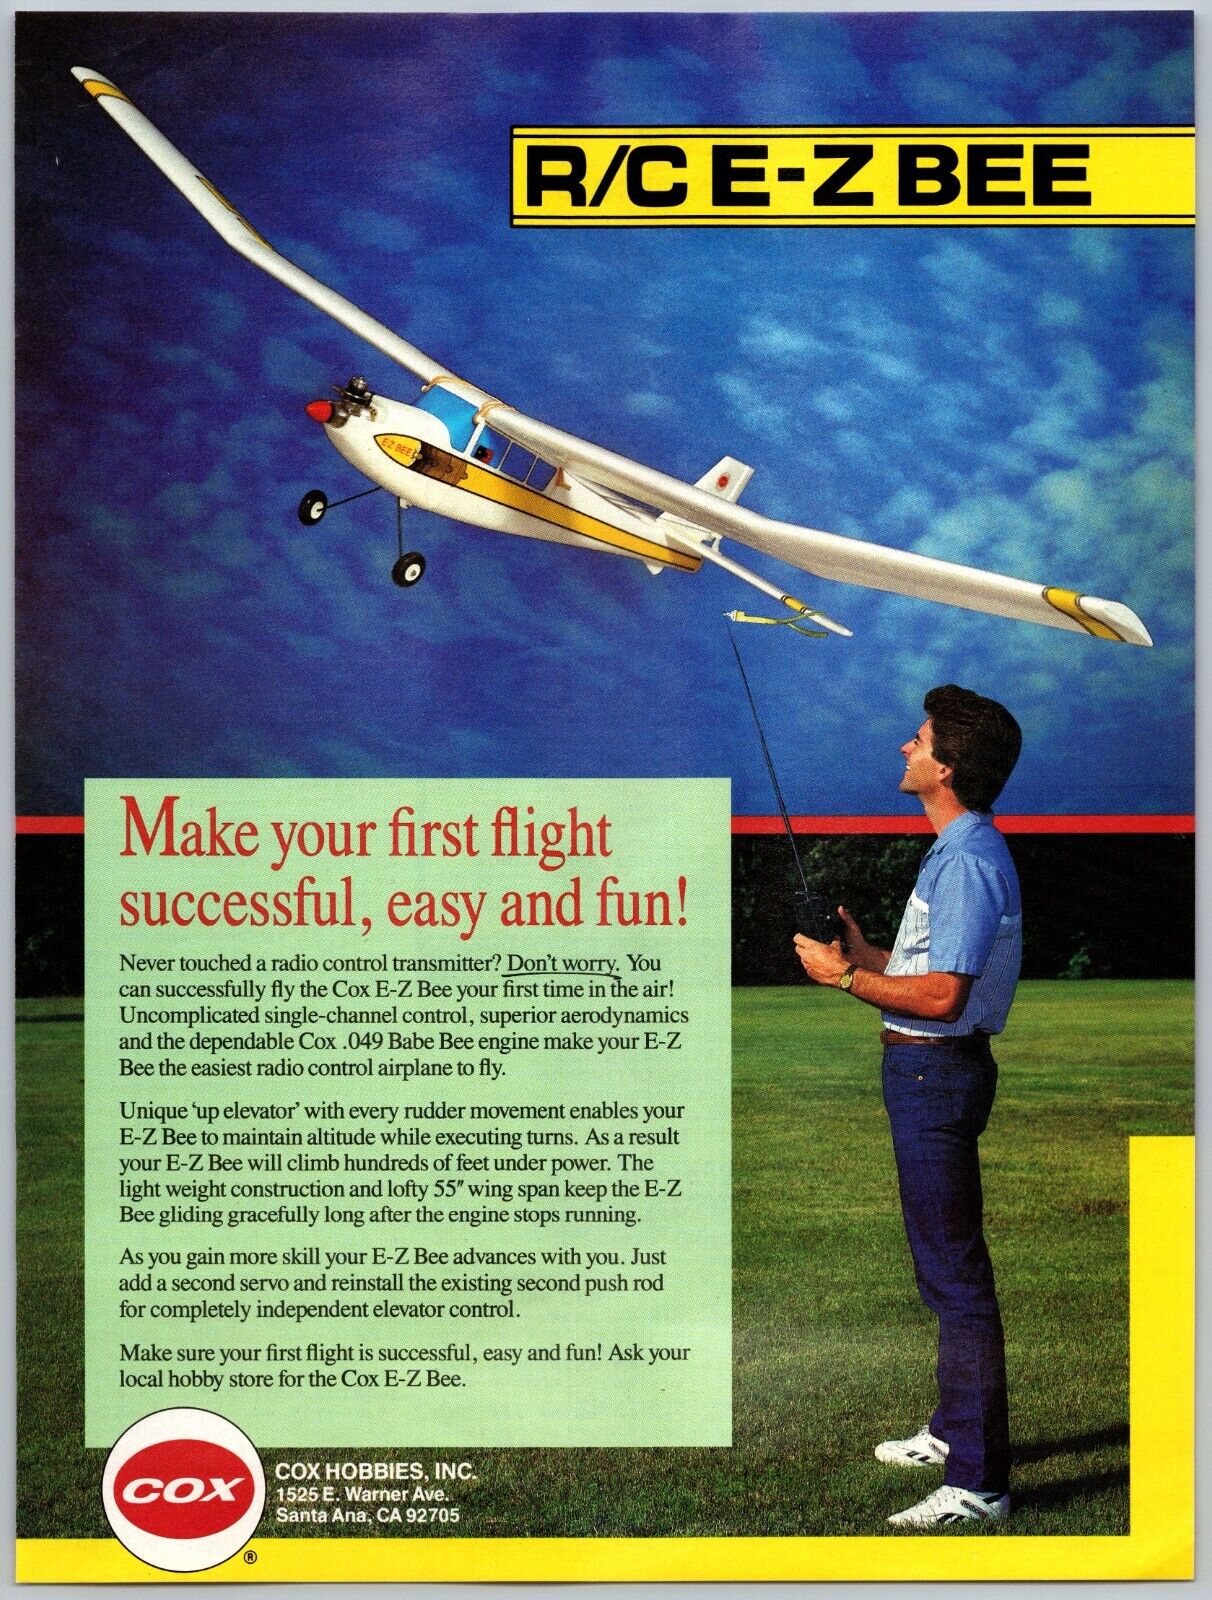 Cox Hobbies Inc. R/C E-Z Bee Model Plane Vintage June, 1988 Full Page Print Ad